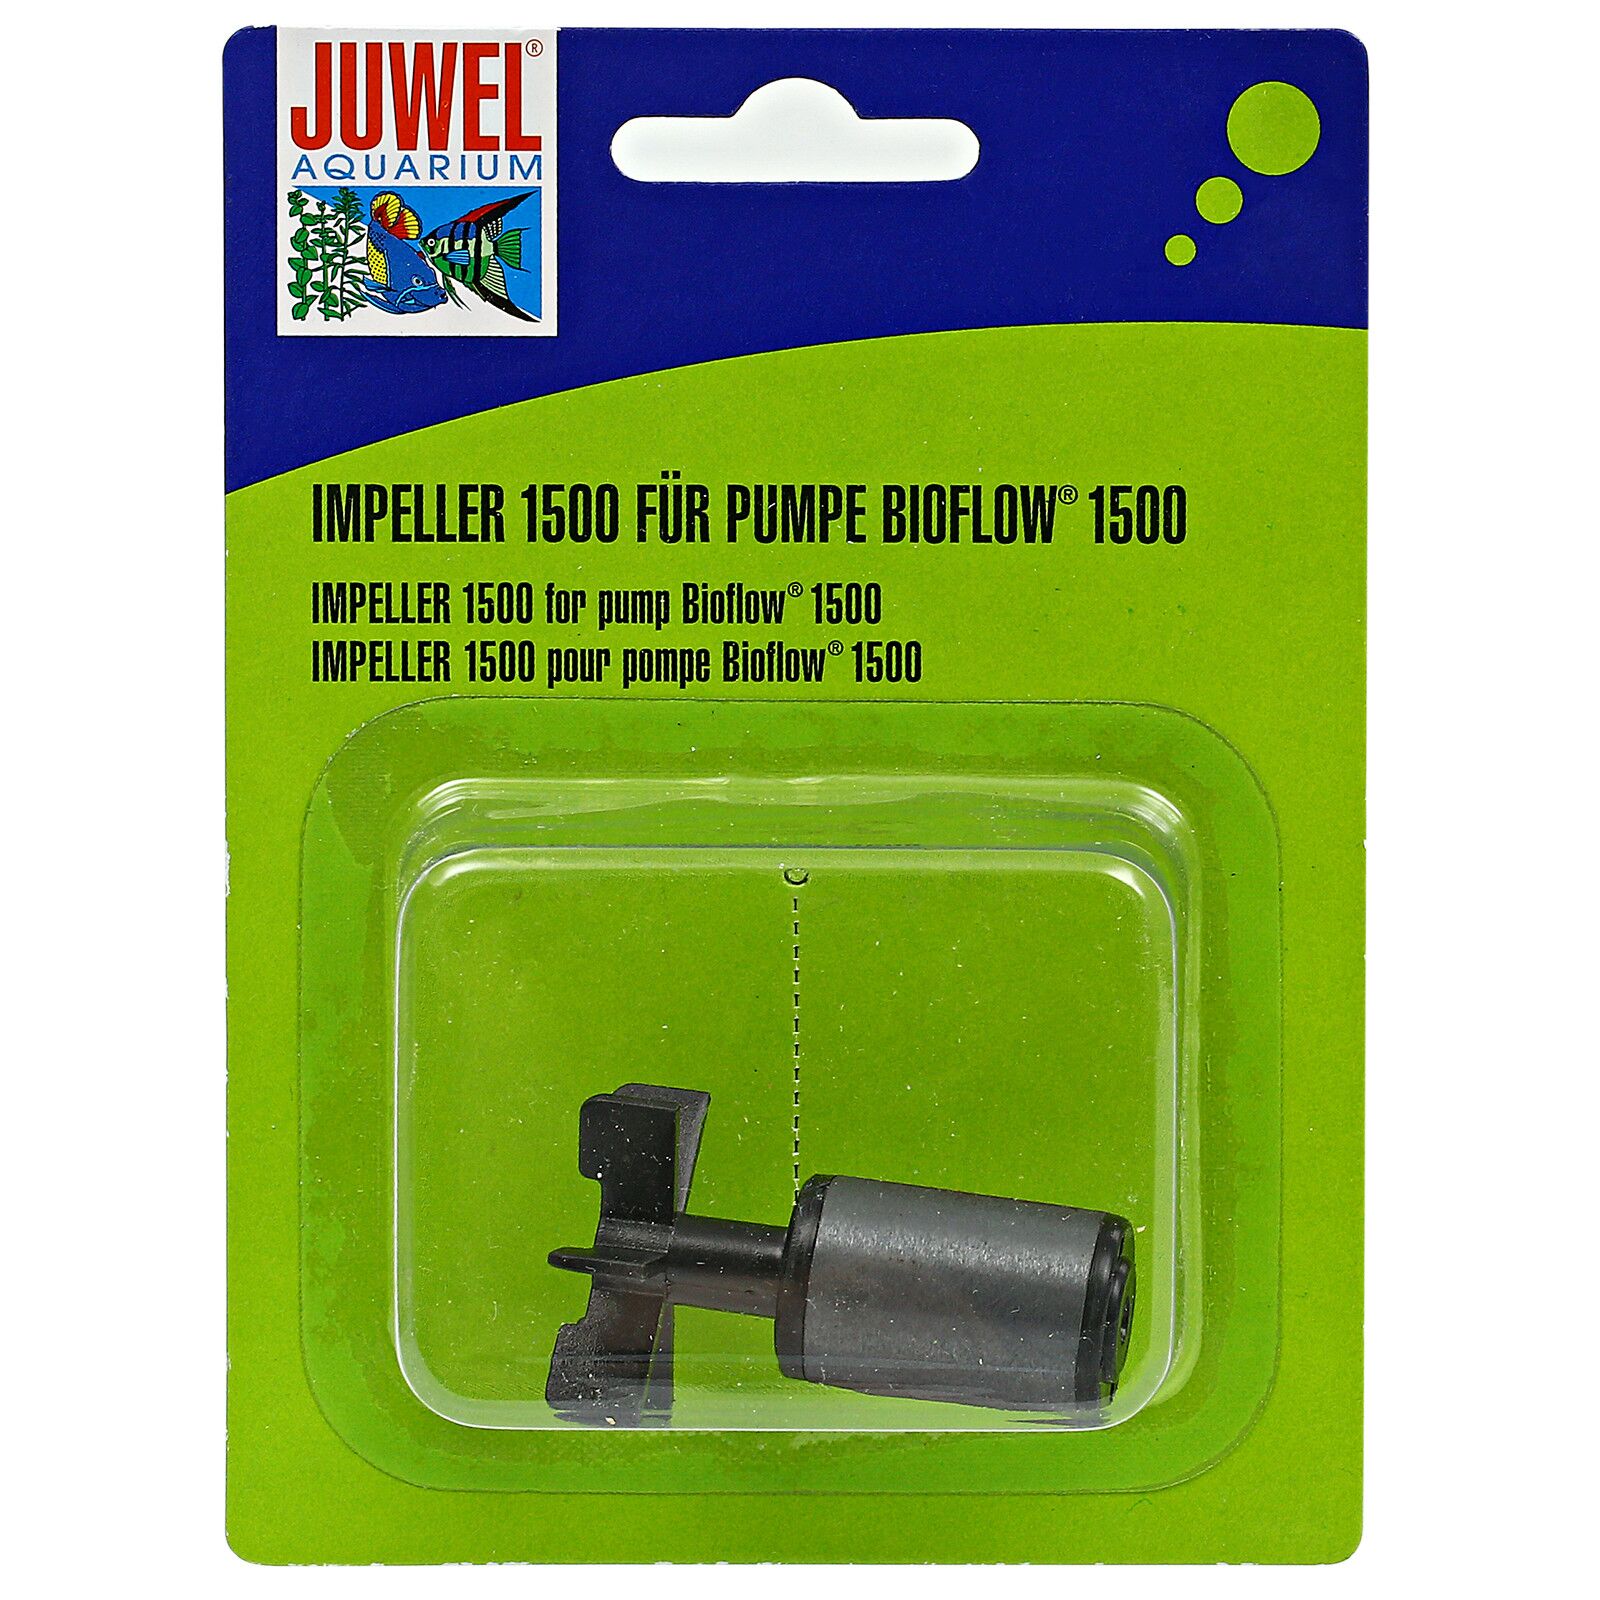 Juwel - Impeller - Bioflow &amp; Pumpe